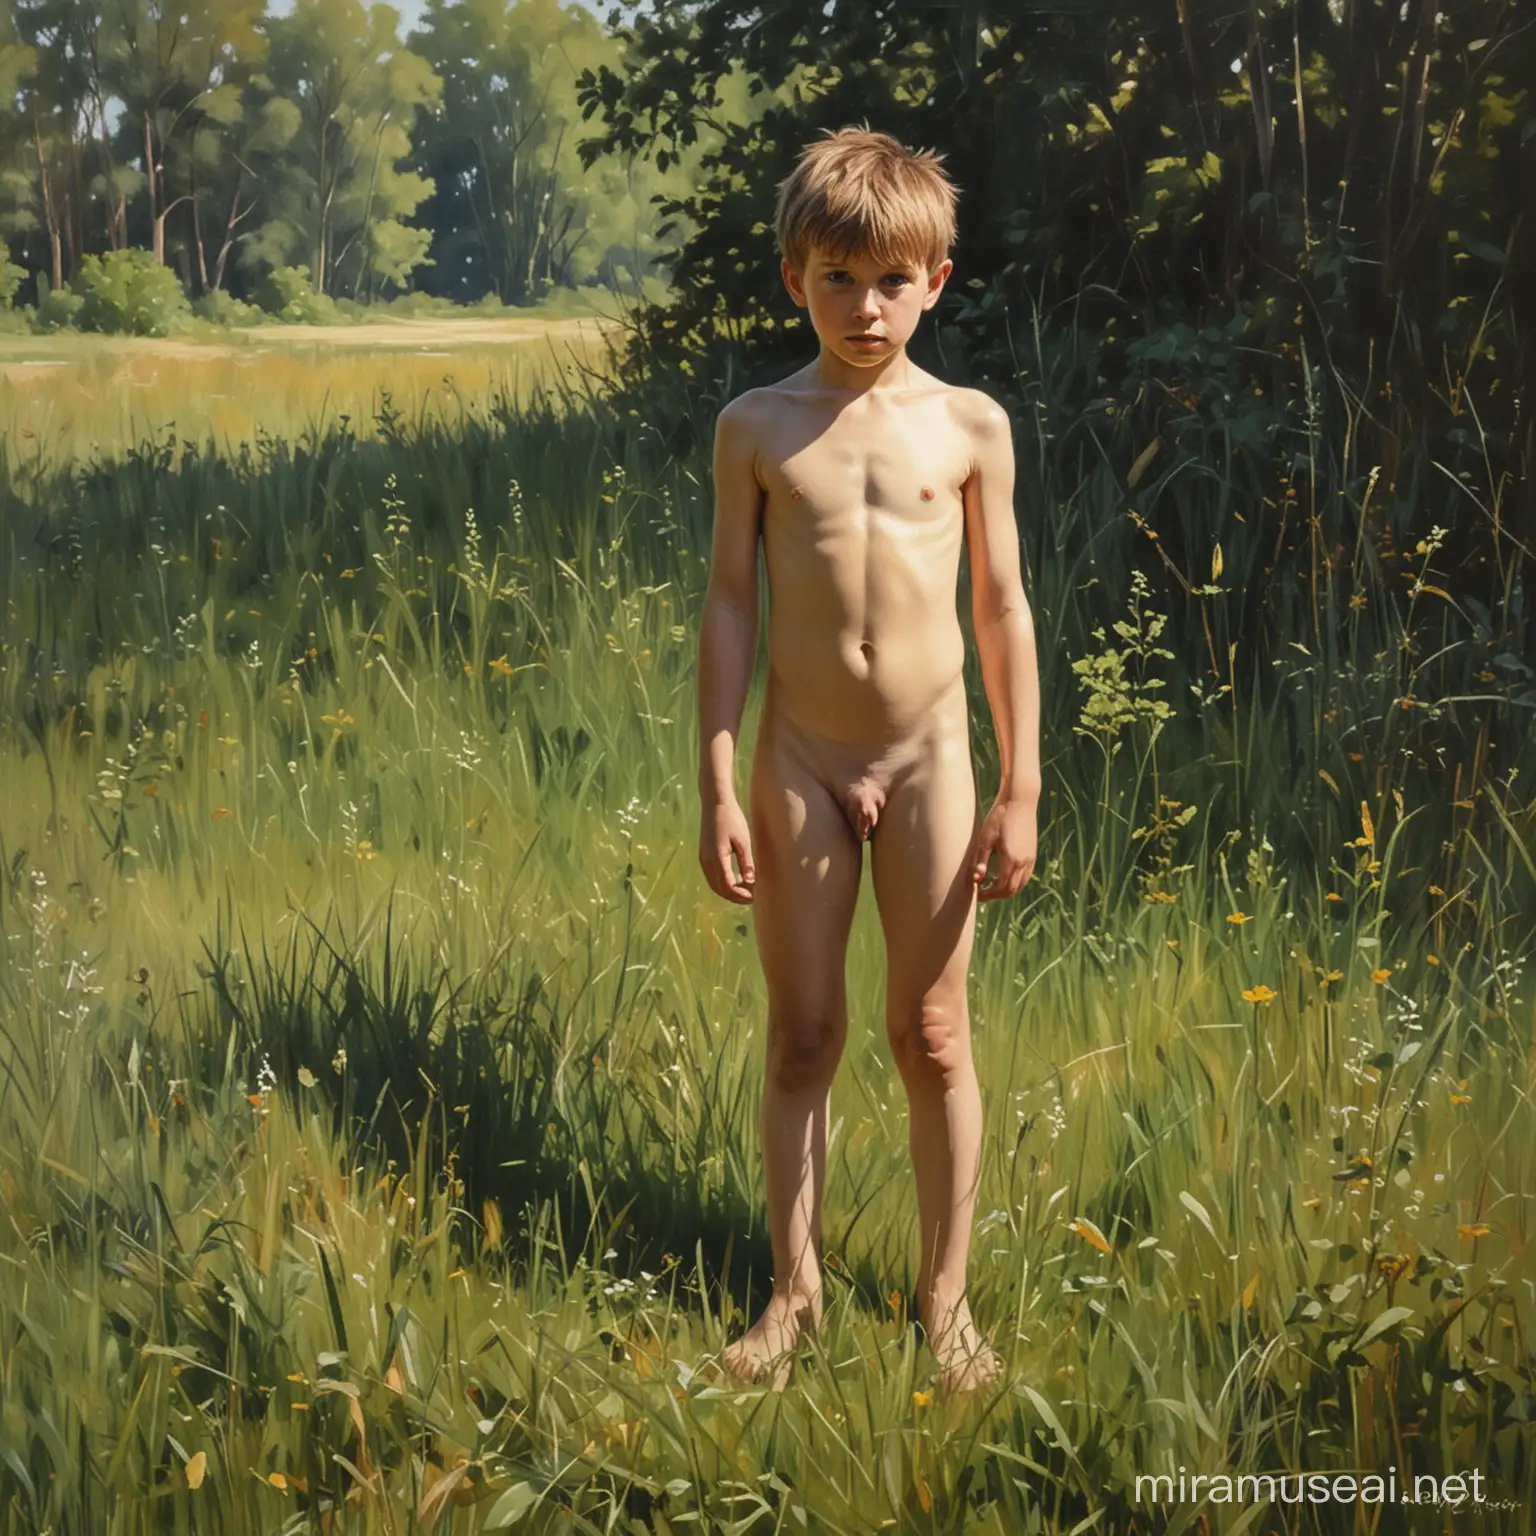 Naked Boy in Sunlit Clearing Serene Scene of Youthful Innocence